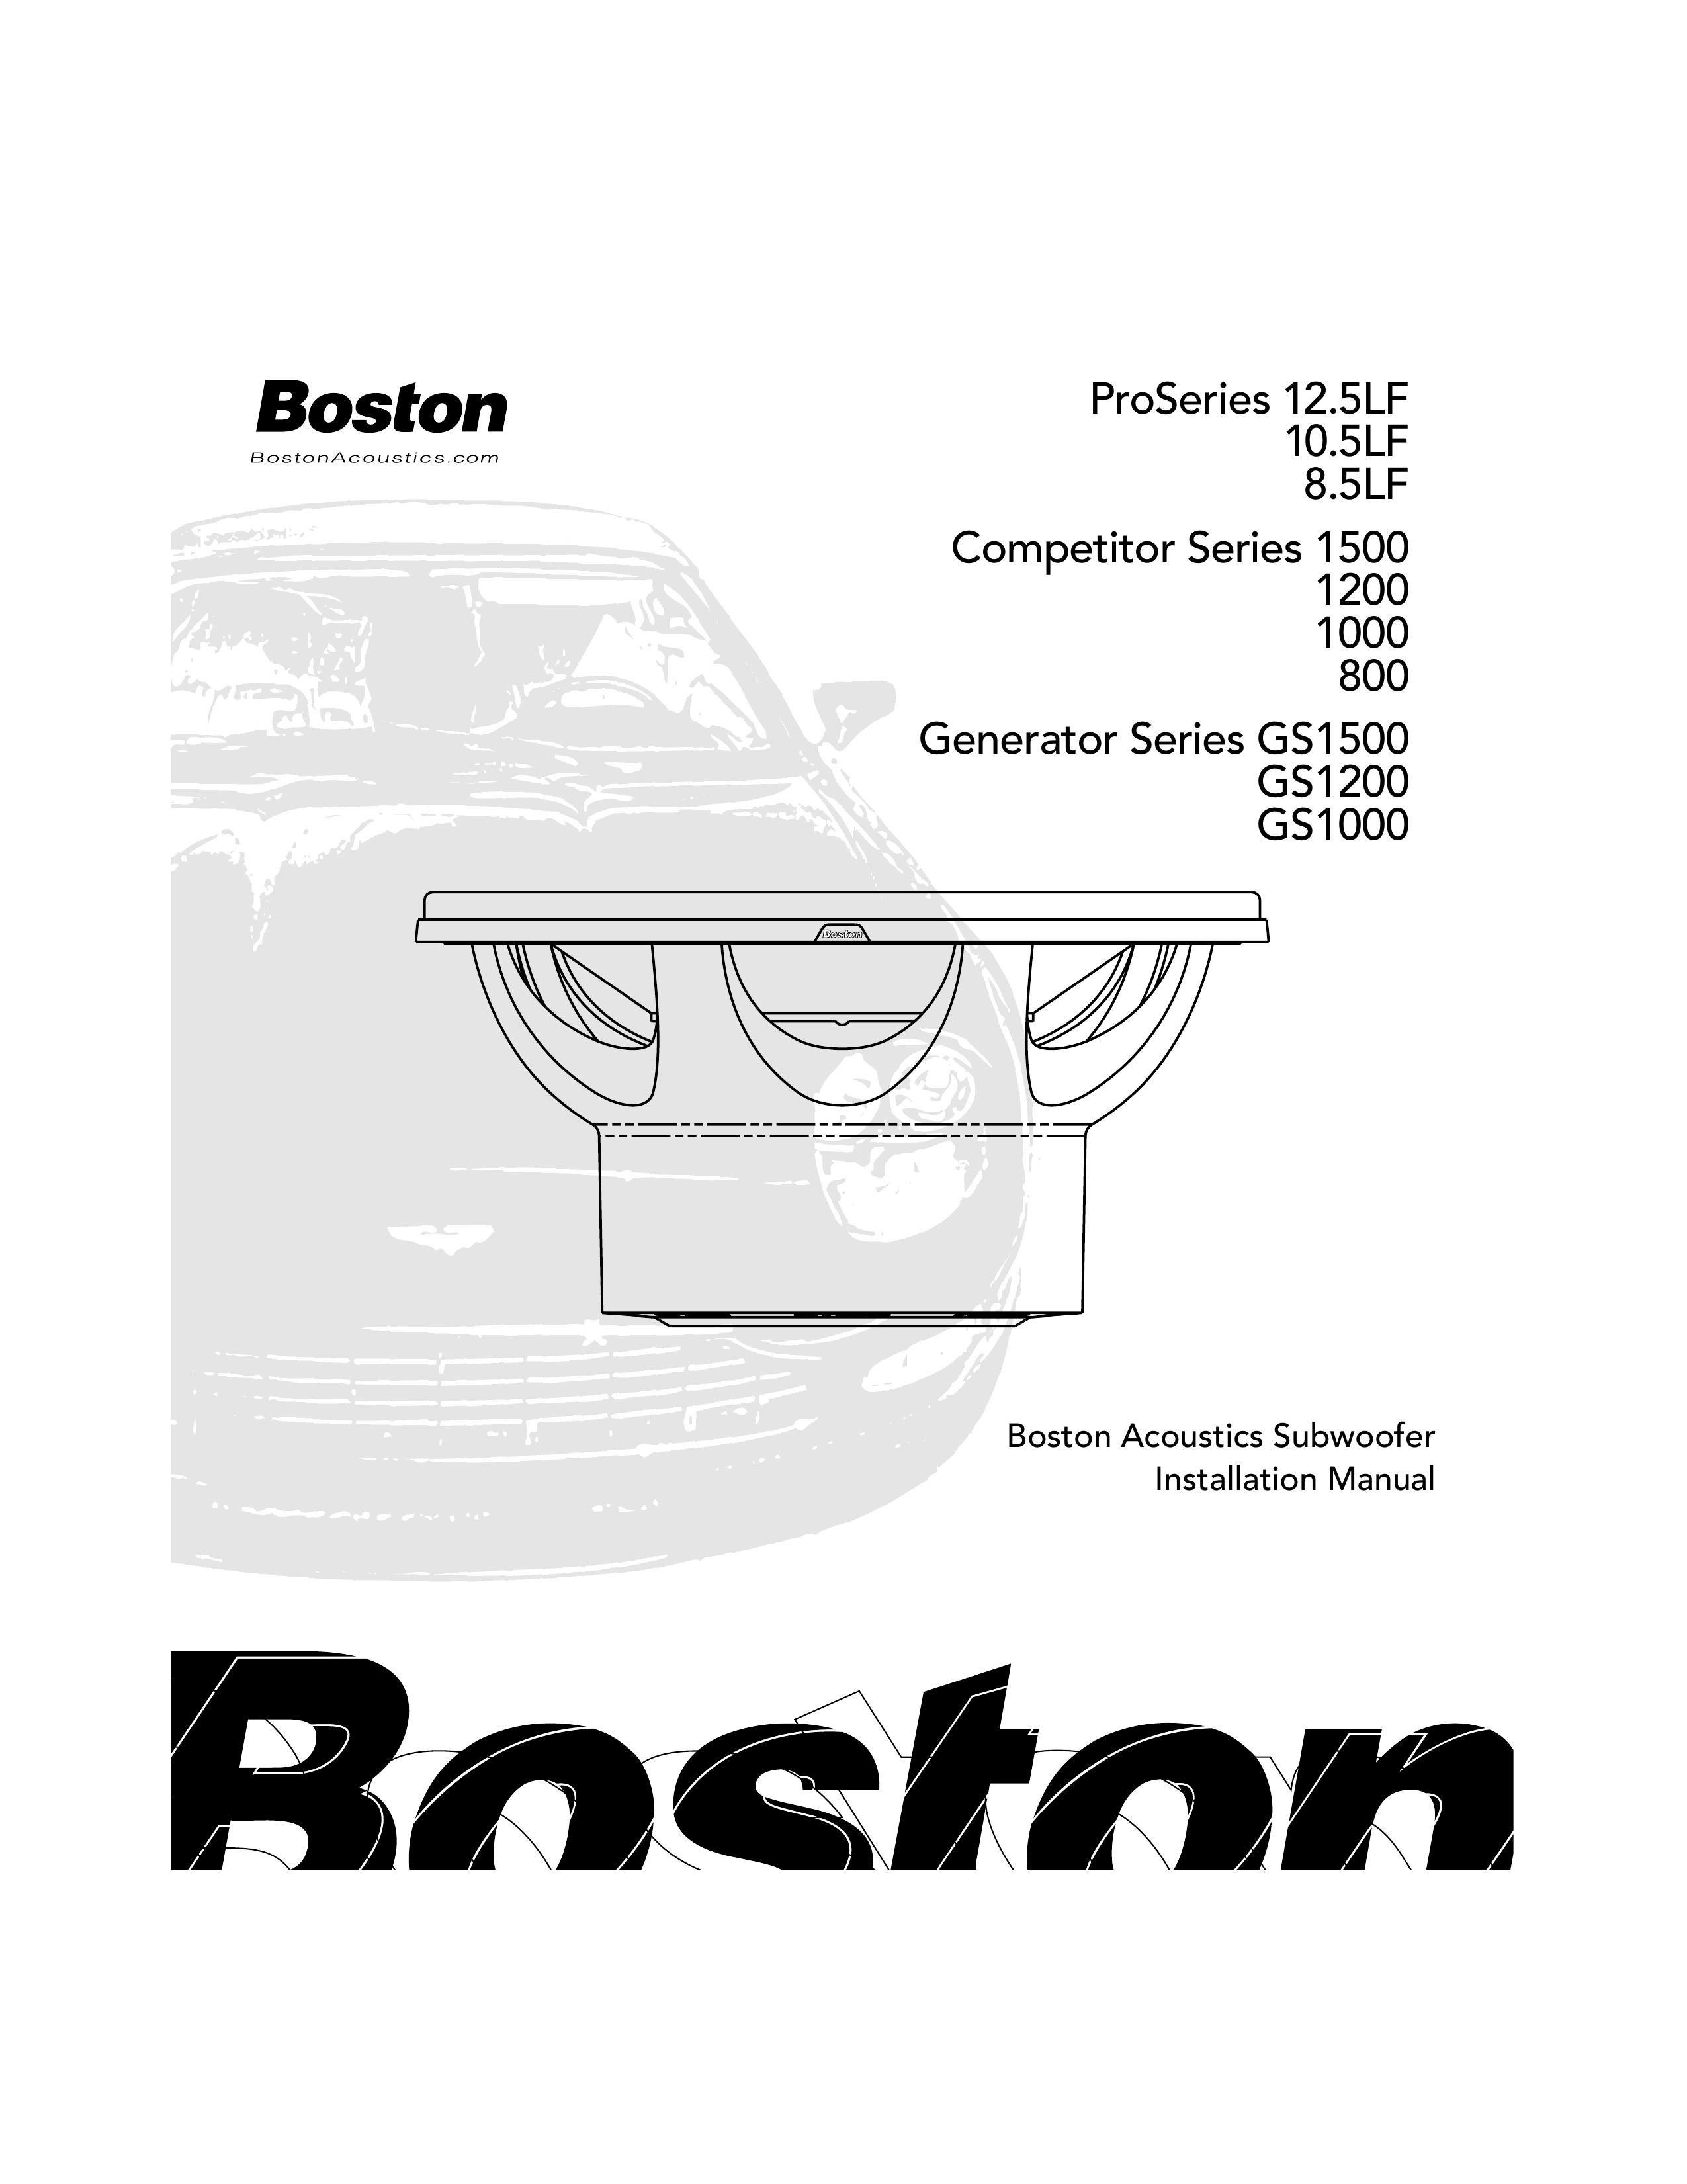 Boston Acoustics GS1200 Recording Equipment User Manual